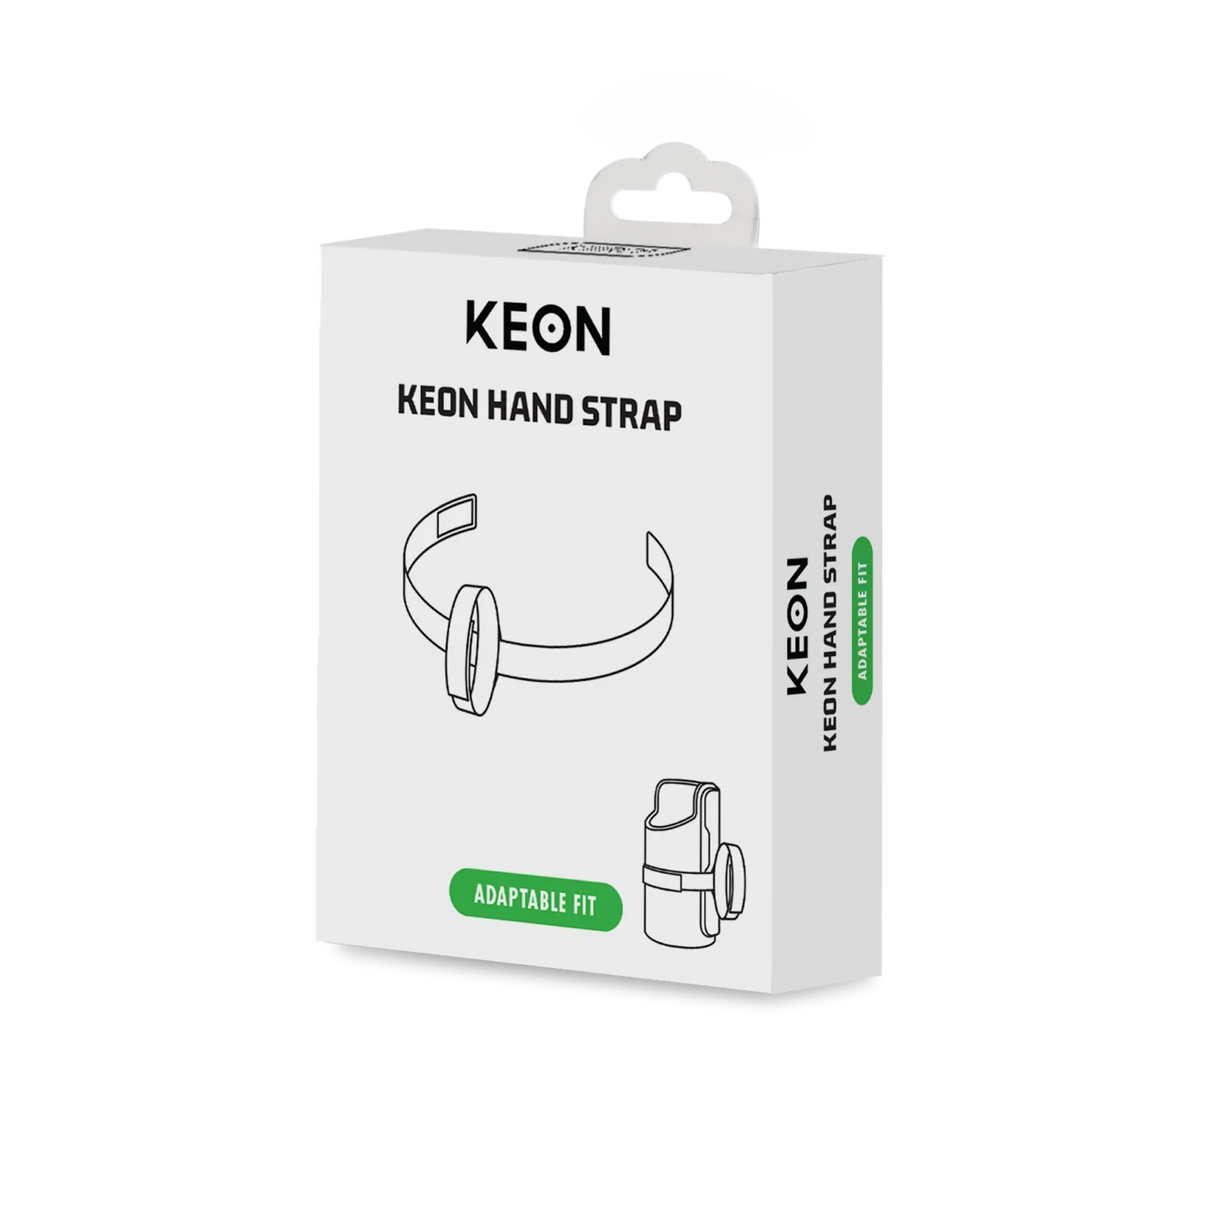 KIIROO Keon Hand Strap